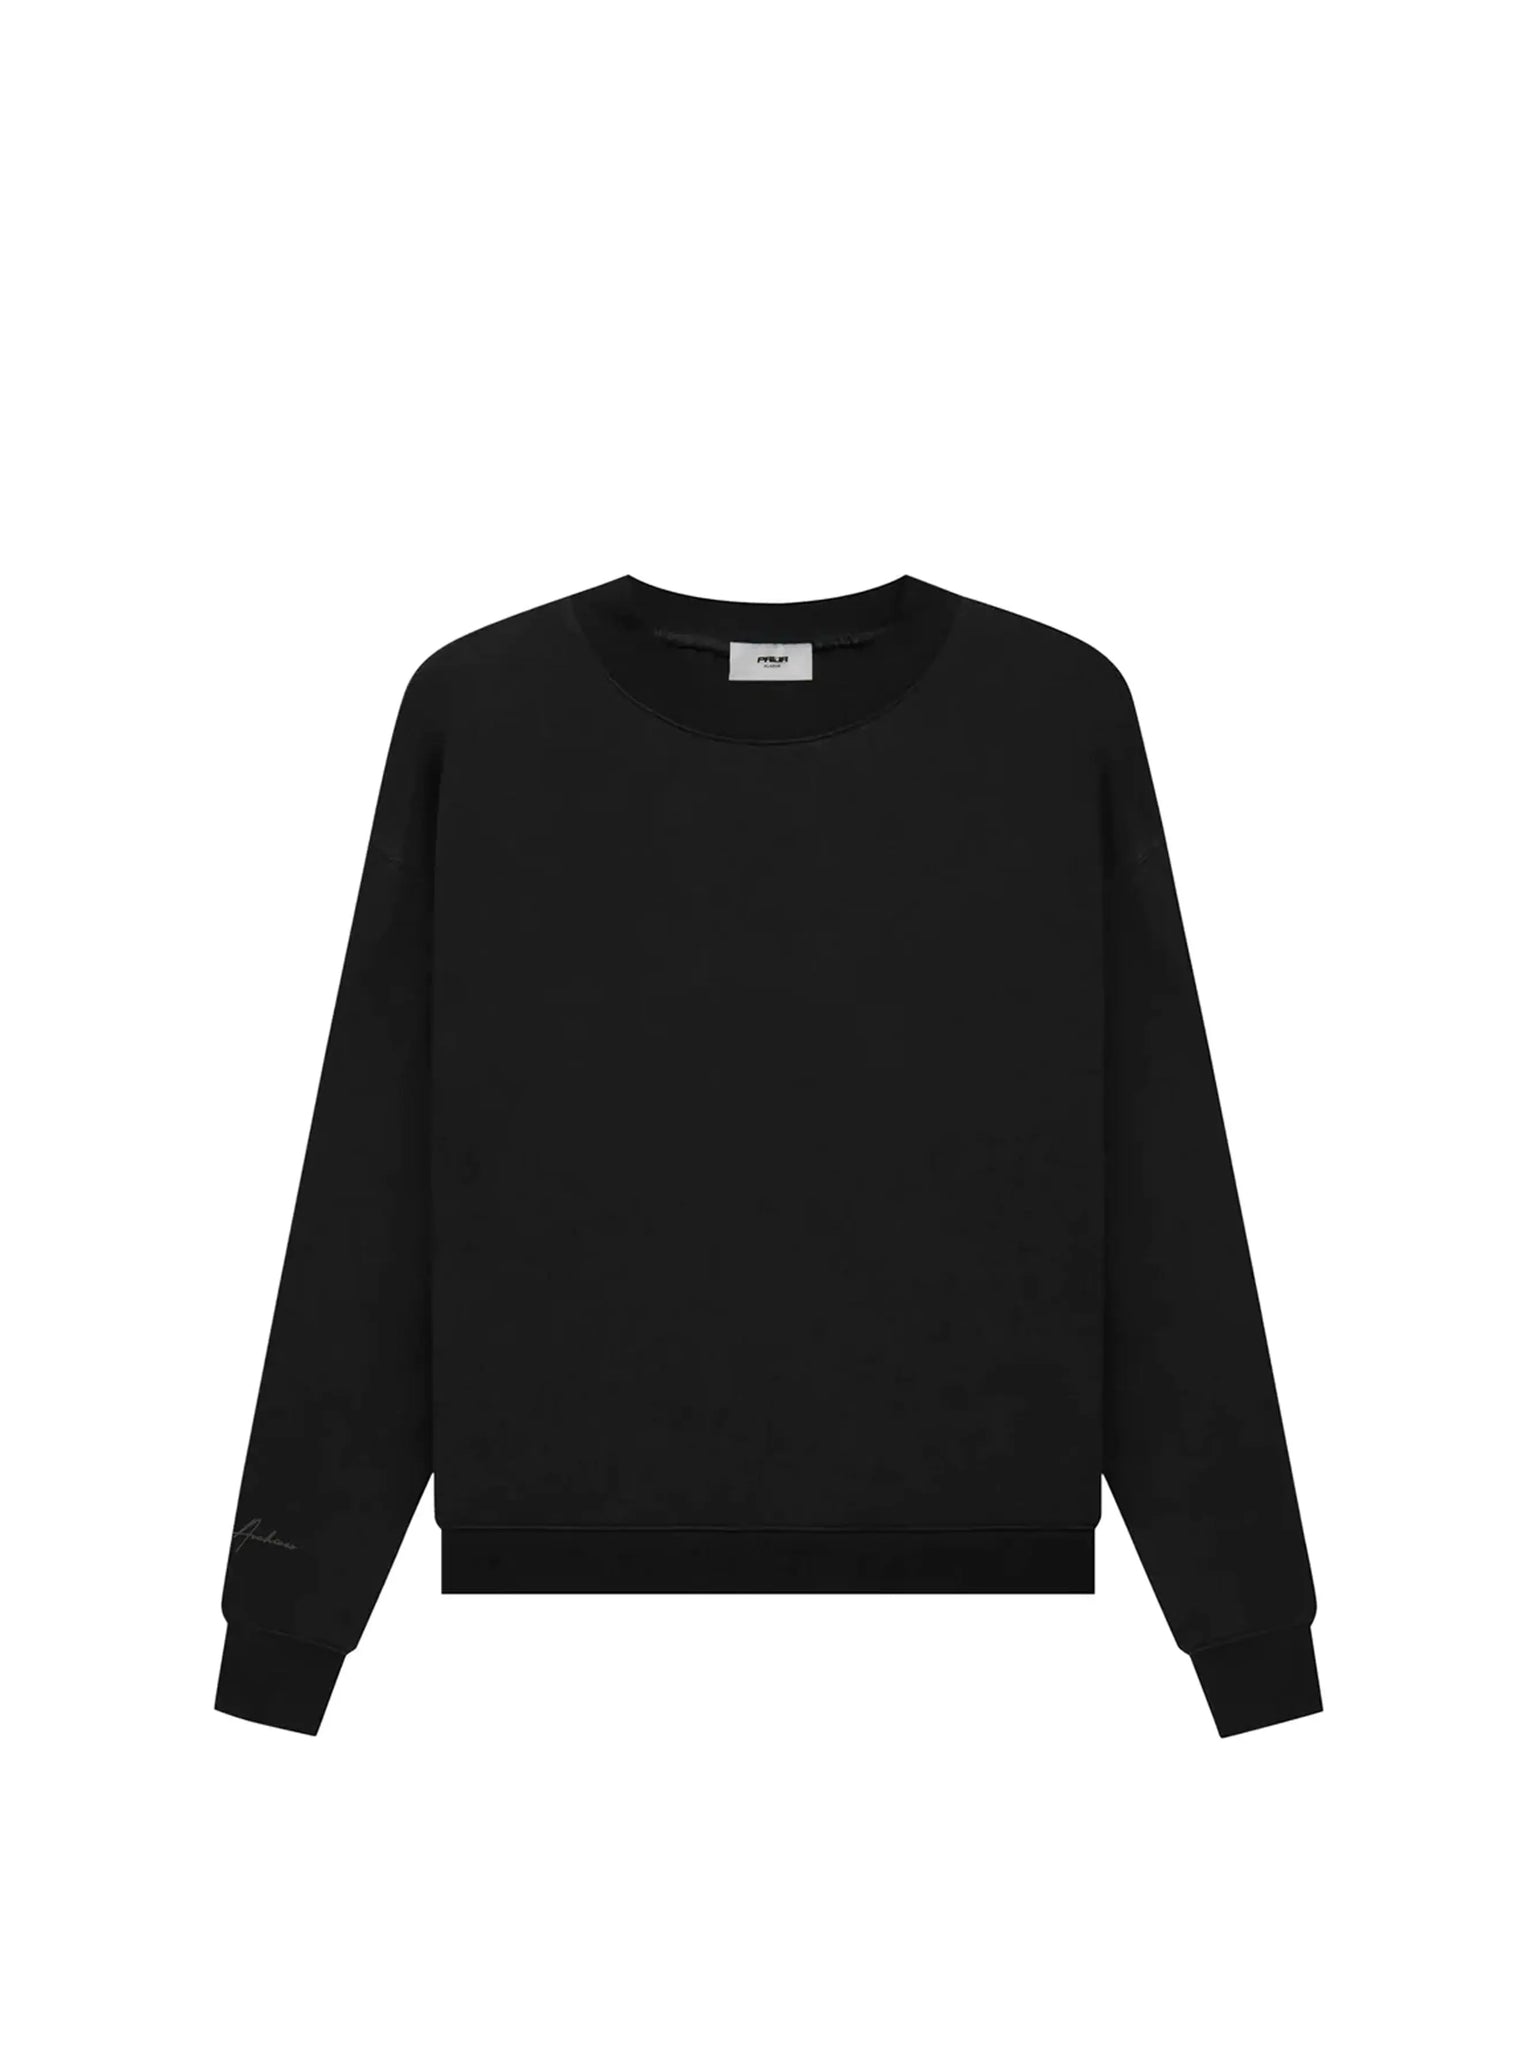 Prior Black Collection Embroidery Logo Oversized Crewneck Sweatshirt Onyx in Melbourne, Australia - Prior